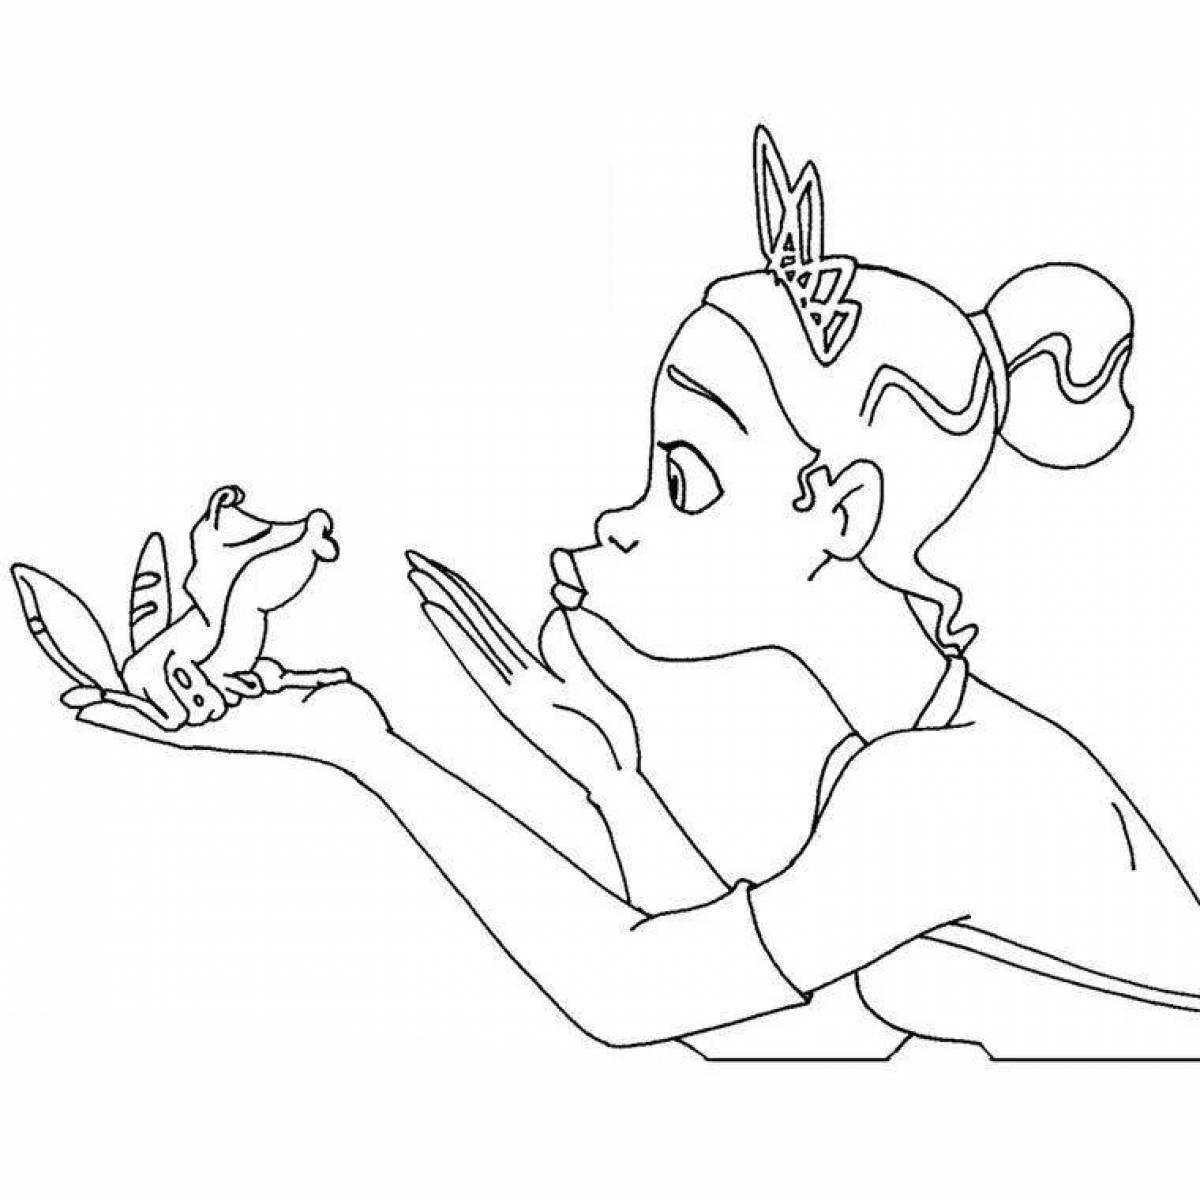 Coloring page shiny frog princess